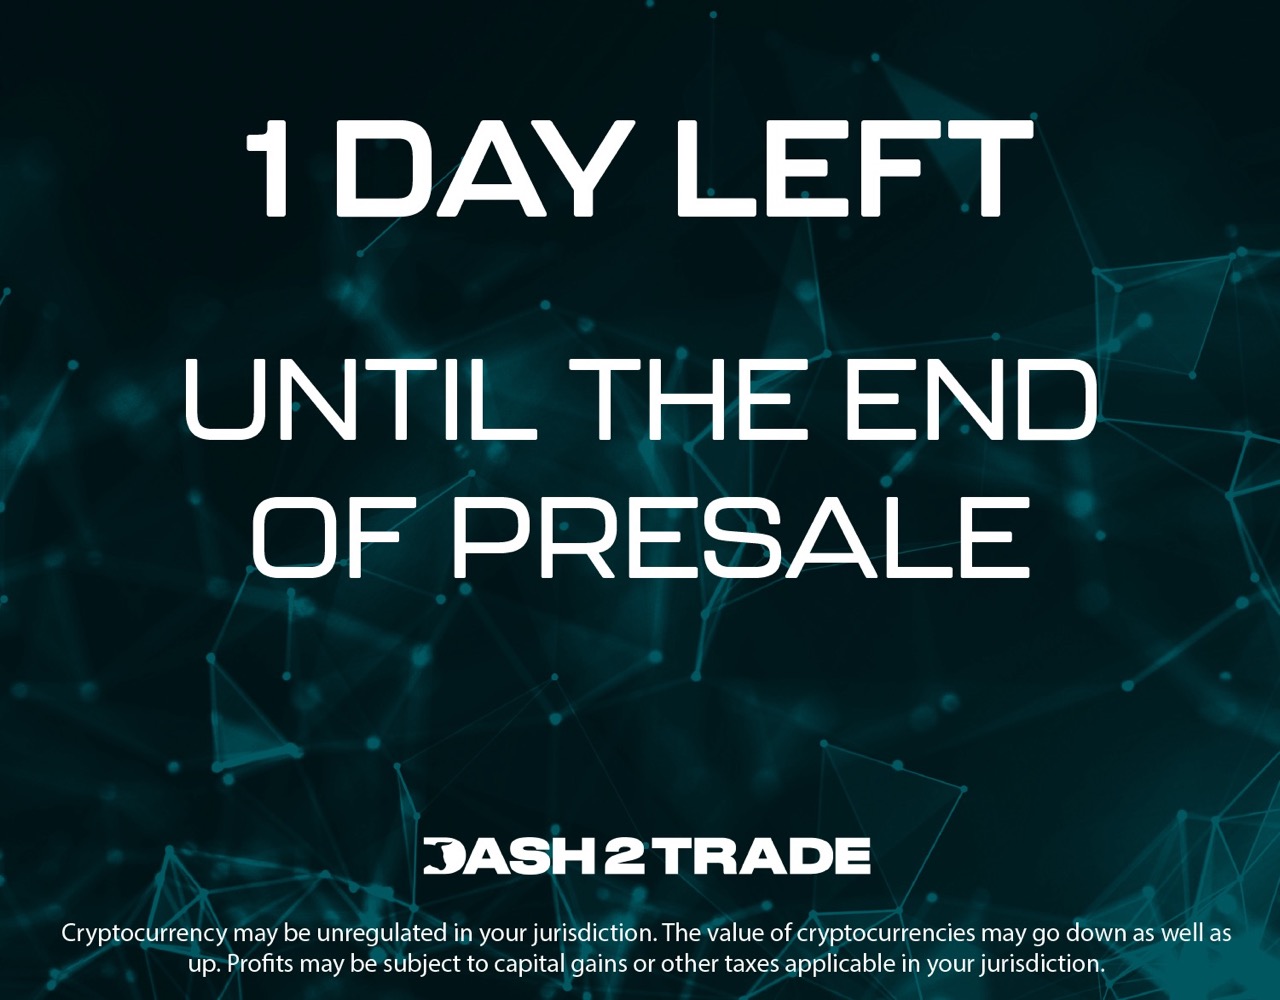 Dash 2 Trade 1 day left